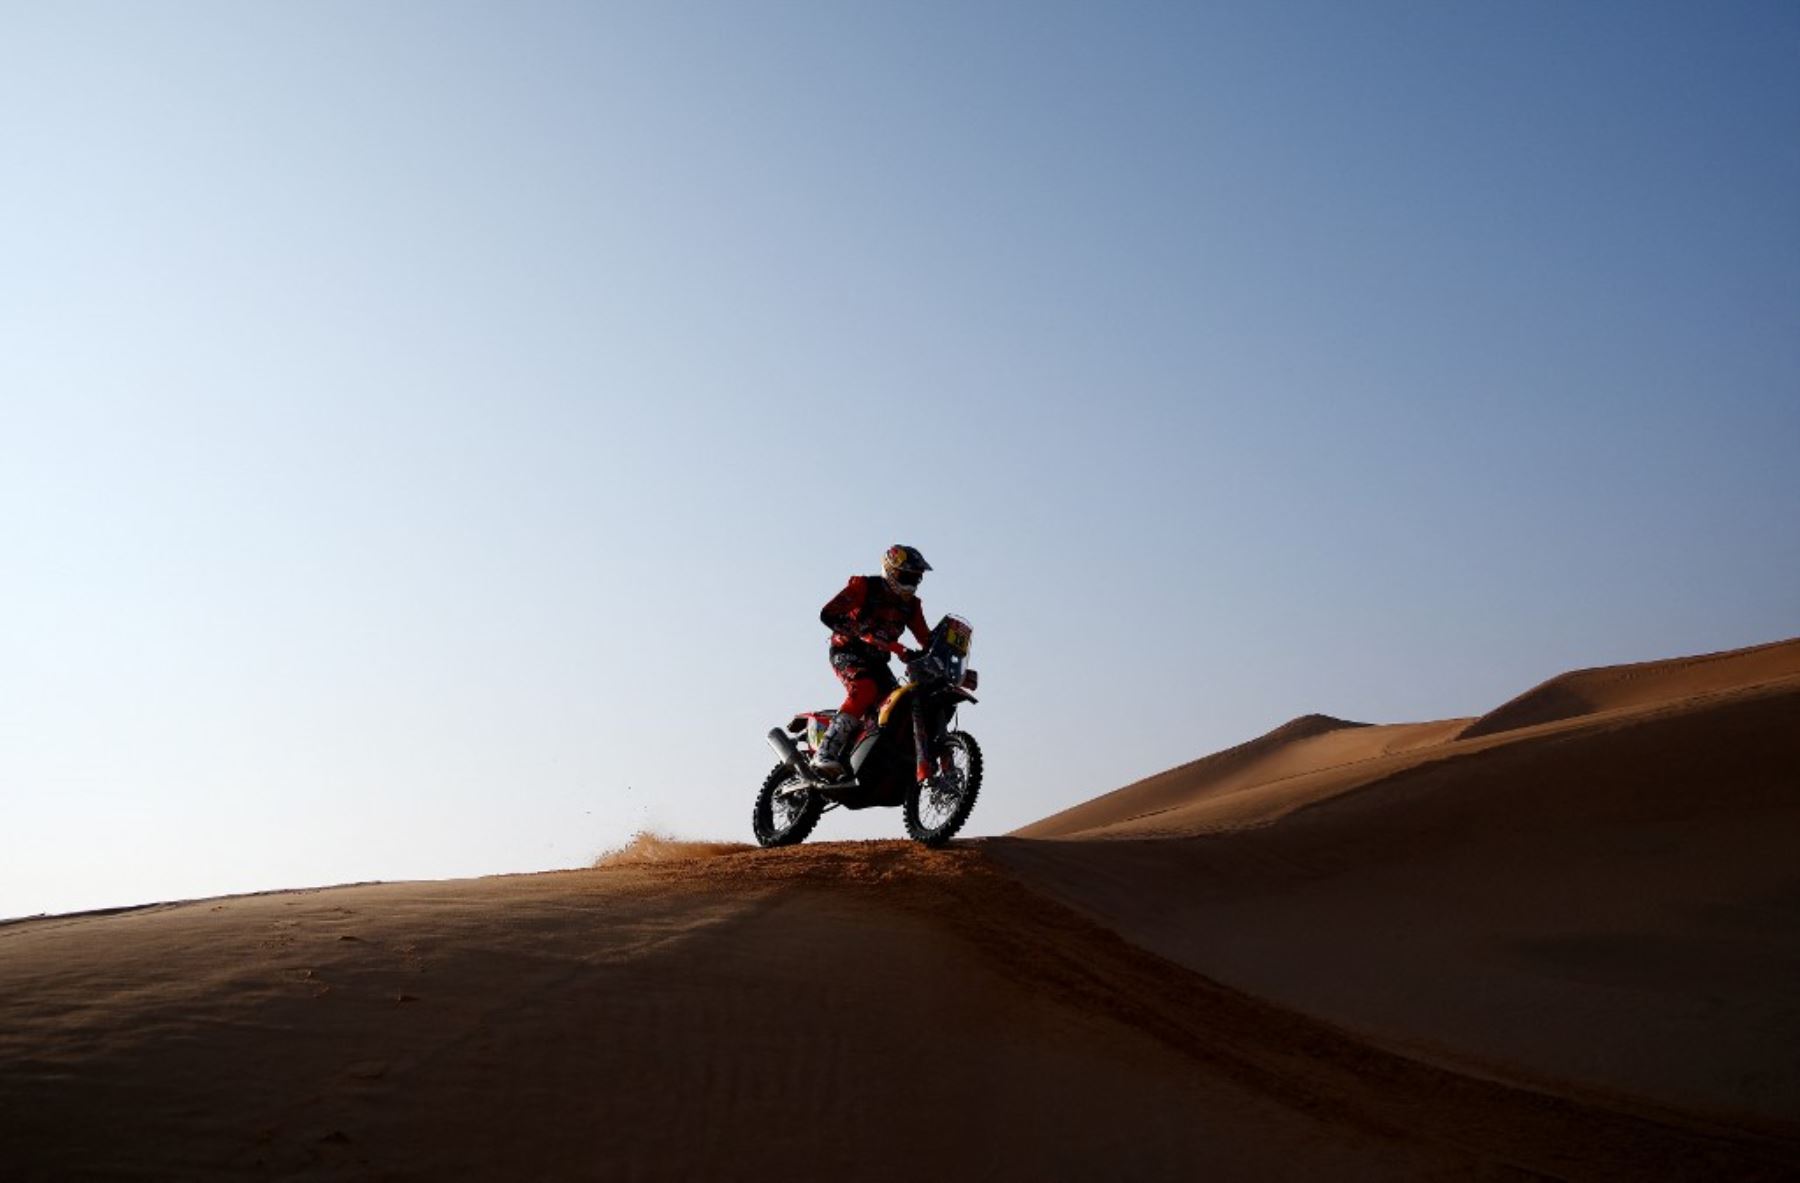 Rally Dakar: Price gana y Van Beveren recupera el liderato en motos